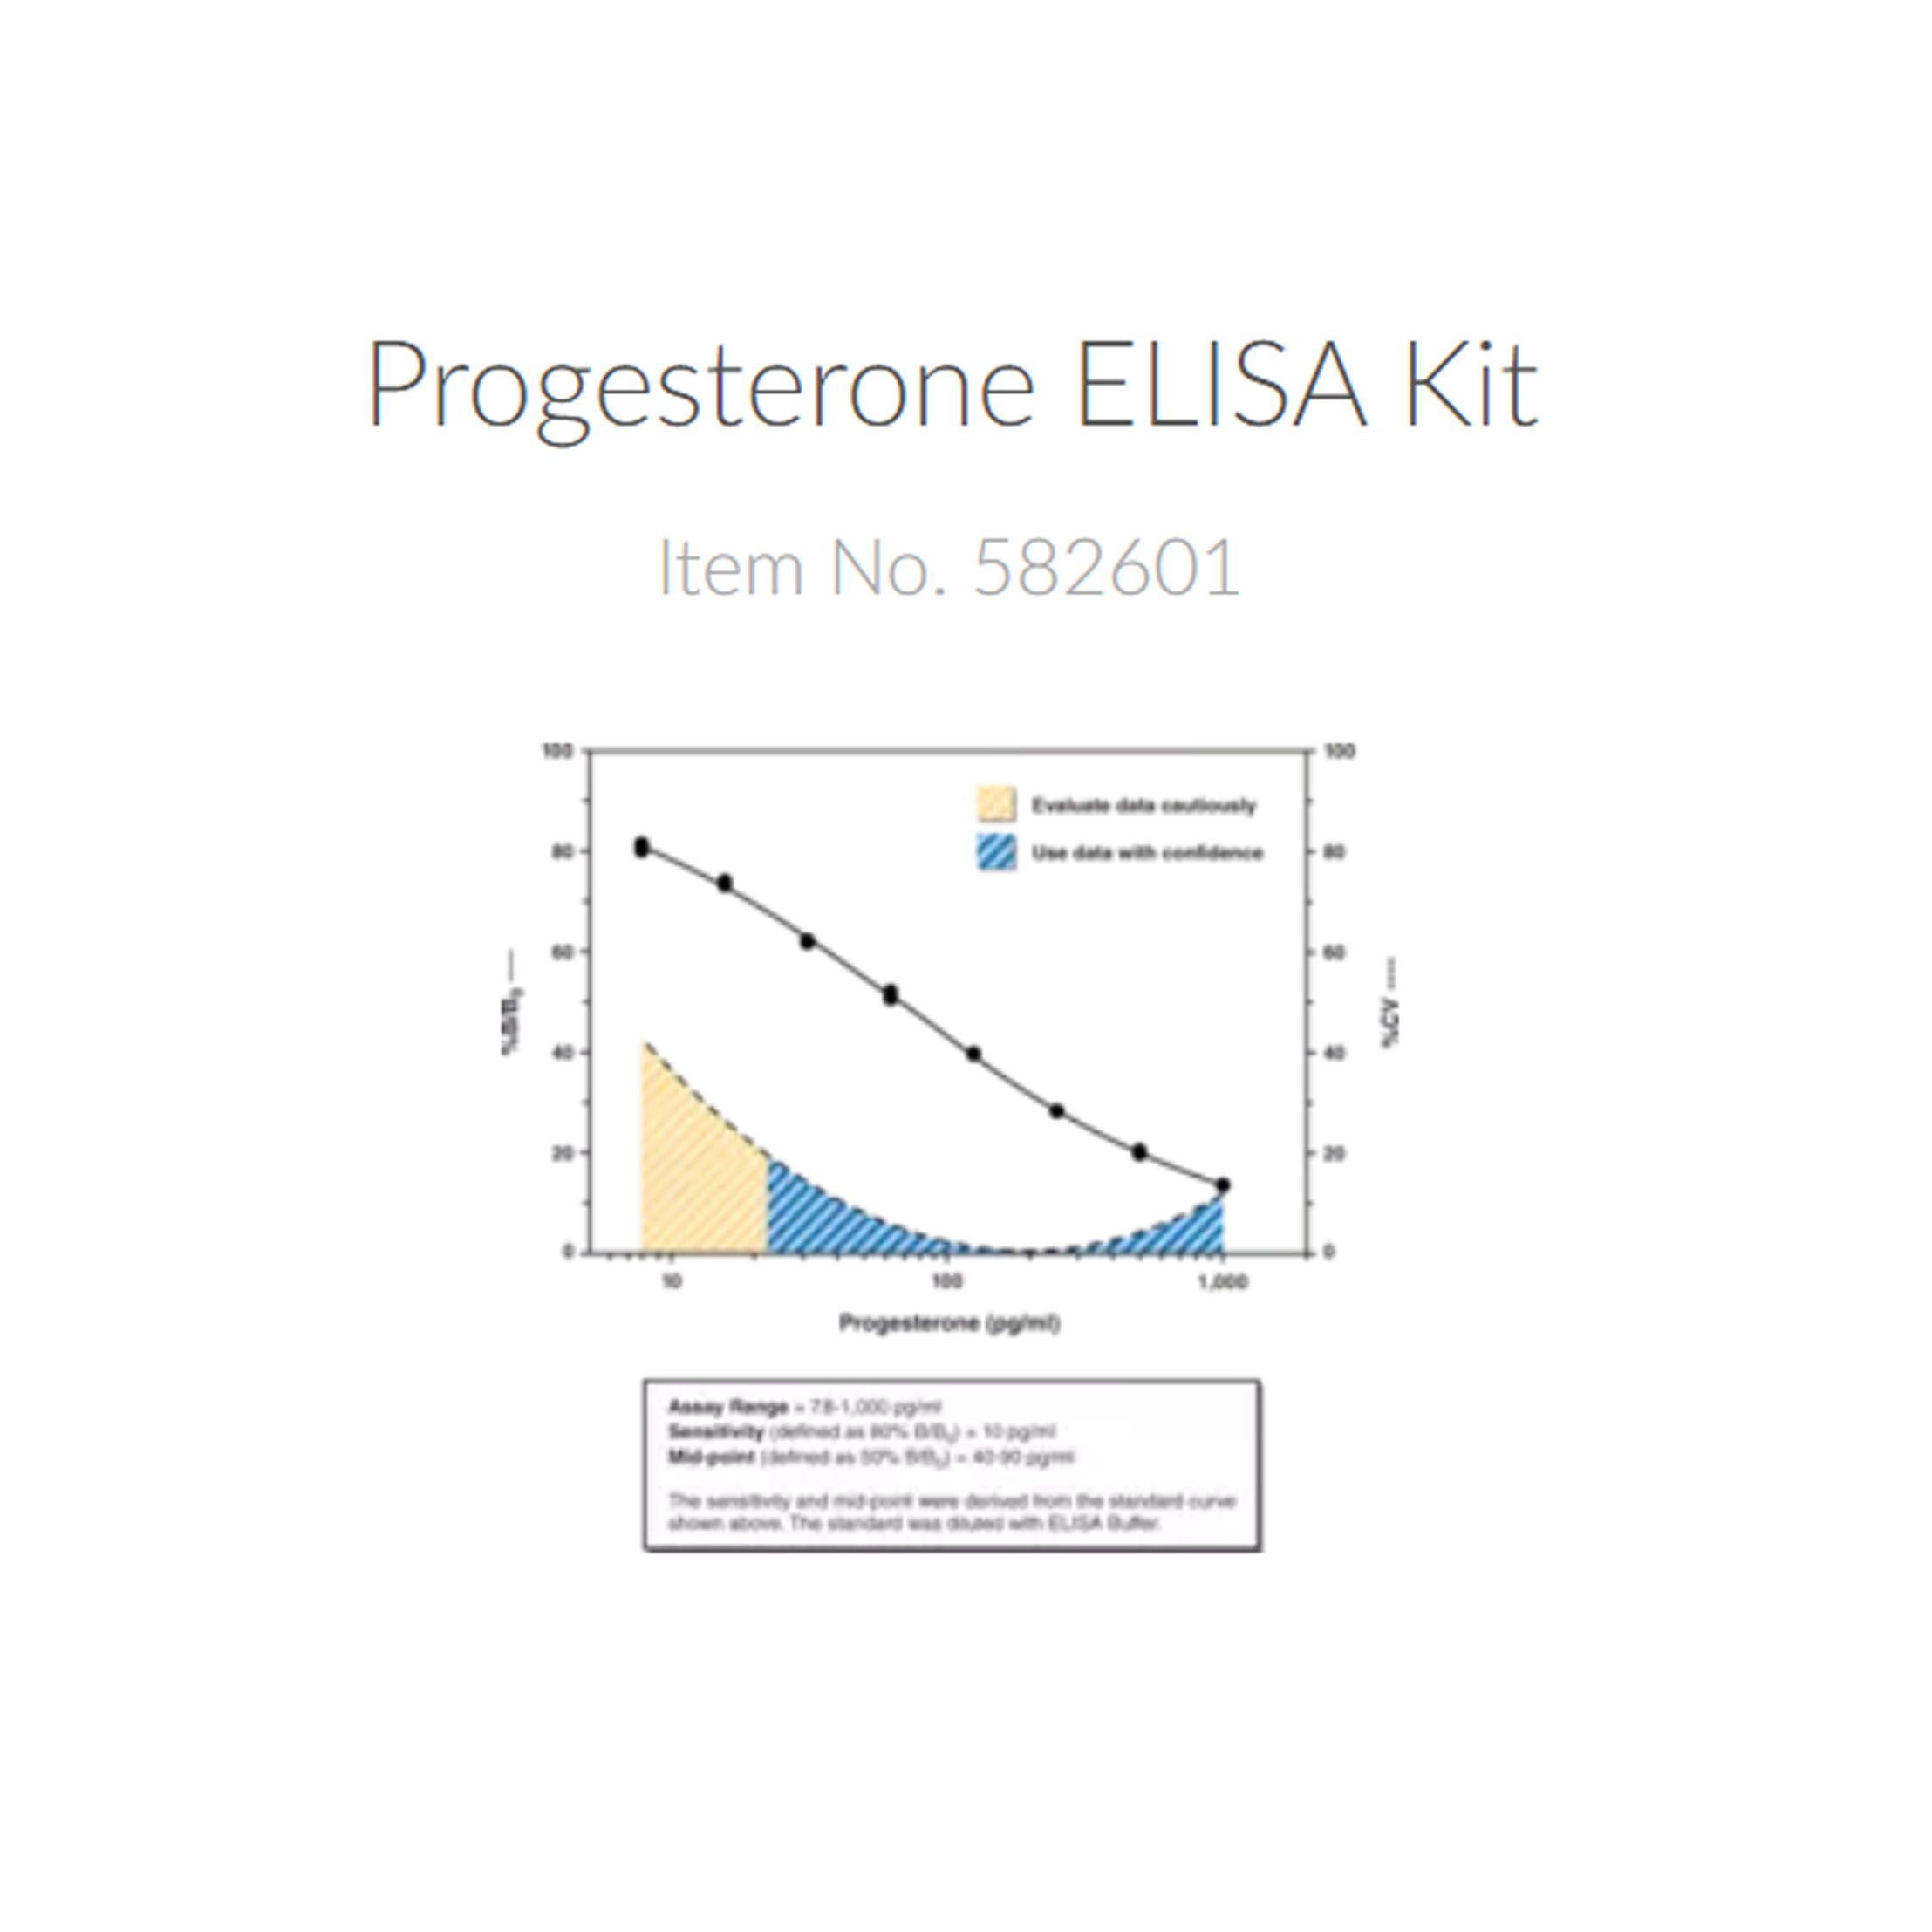 Cayman582601孕酮ELISA检测试剂盒-480次分析（可拆卸）480/96strip wells， Progesterone ELISA Kit